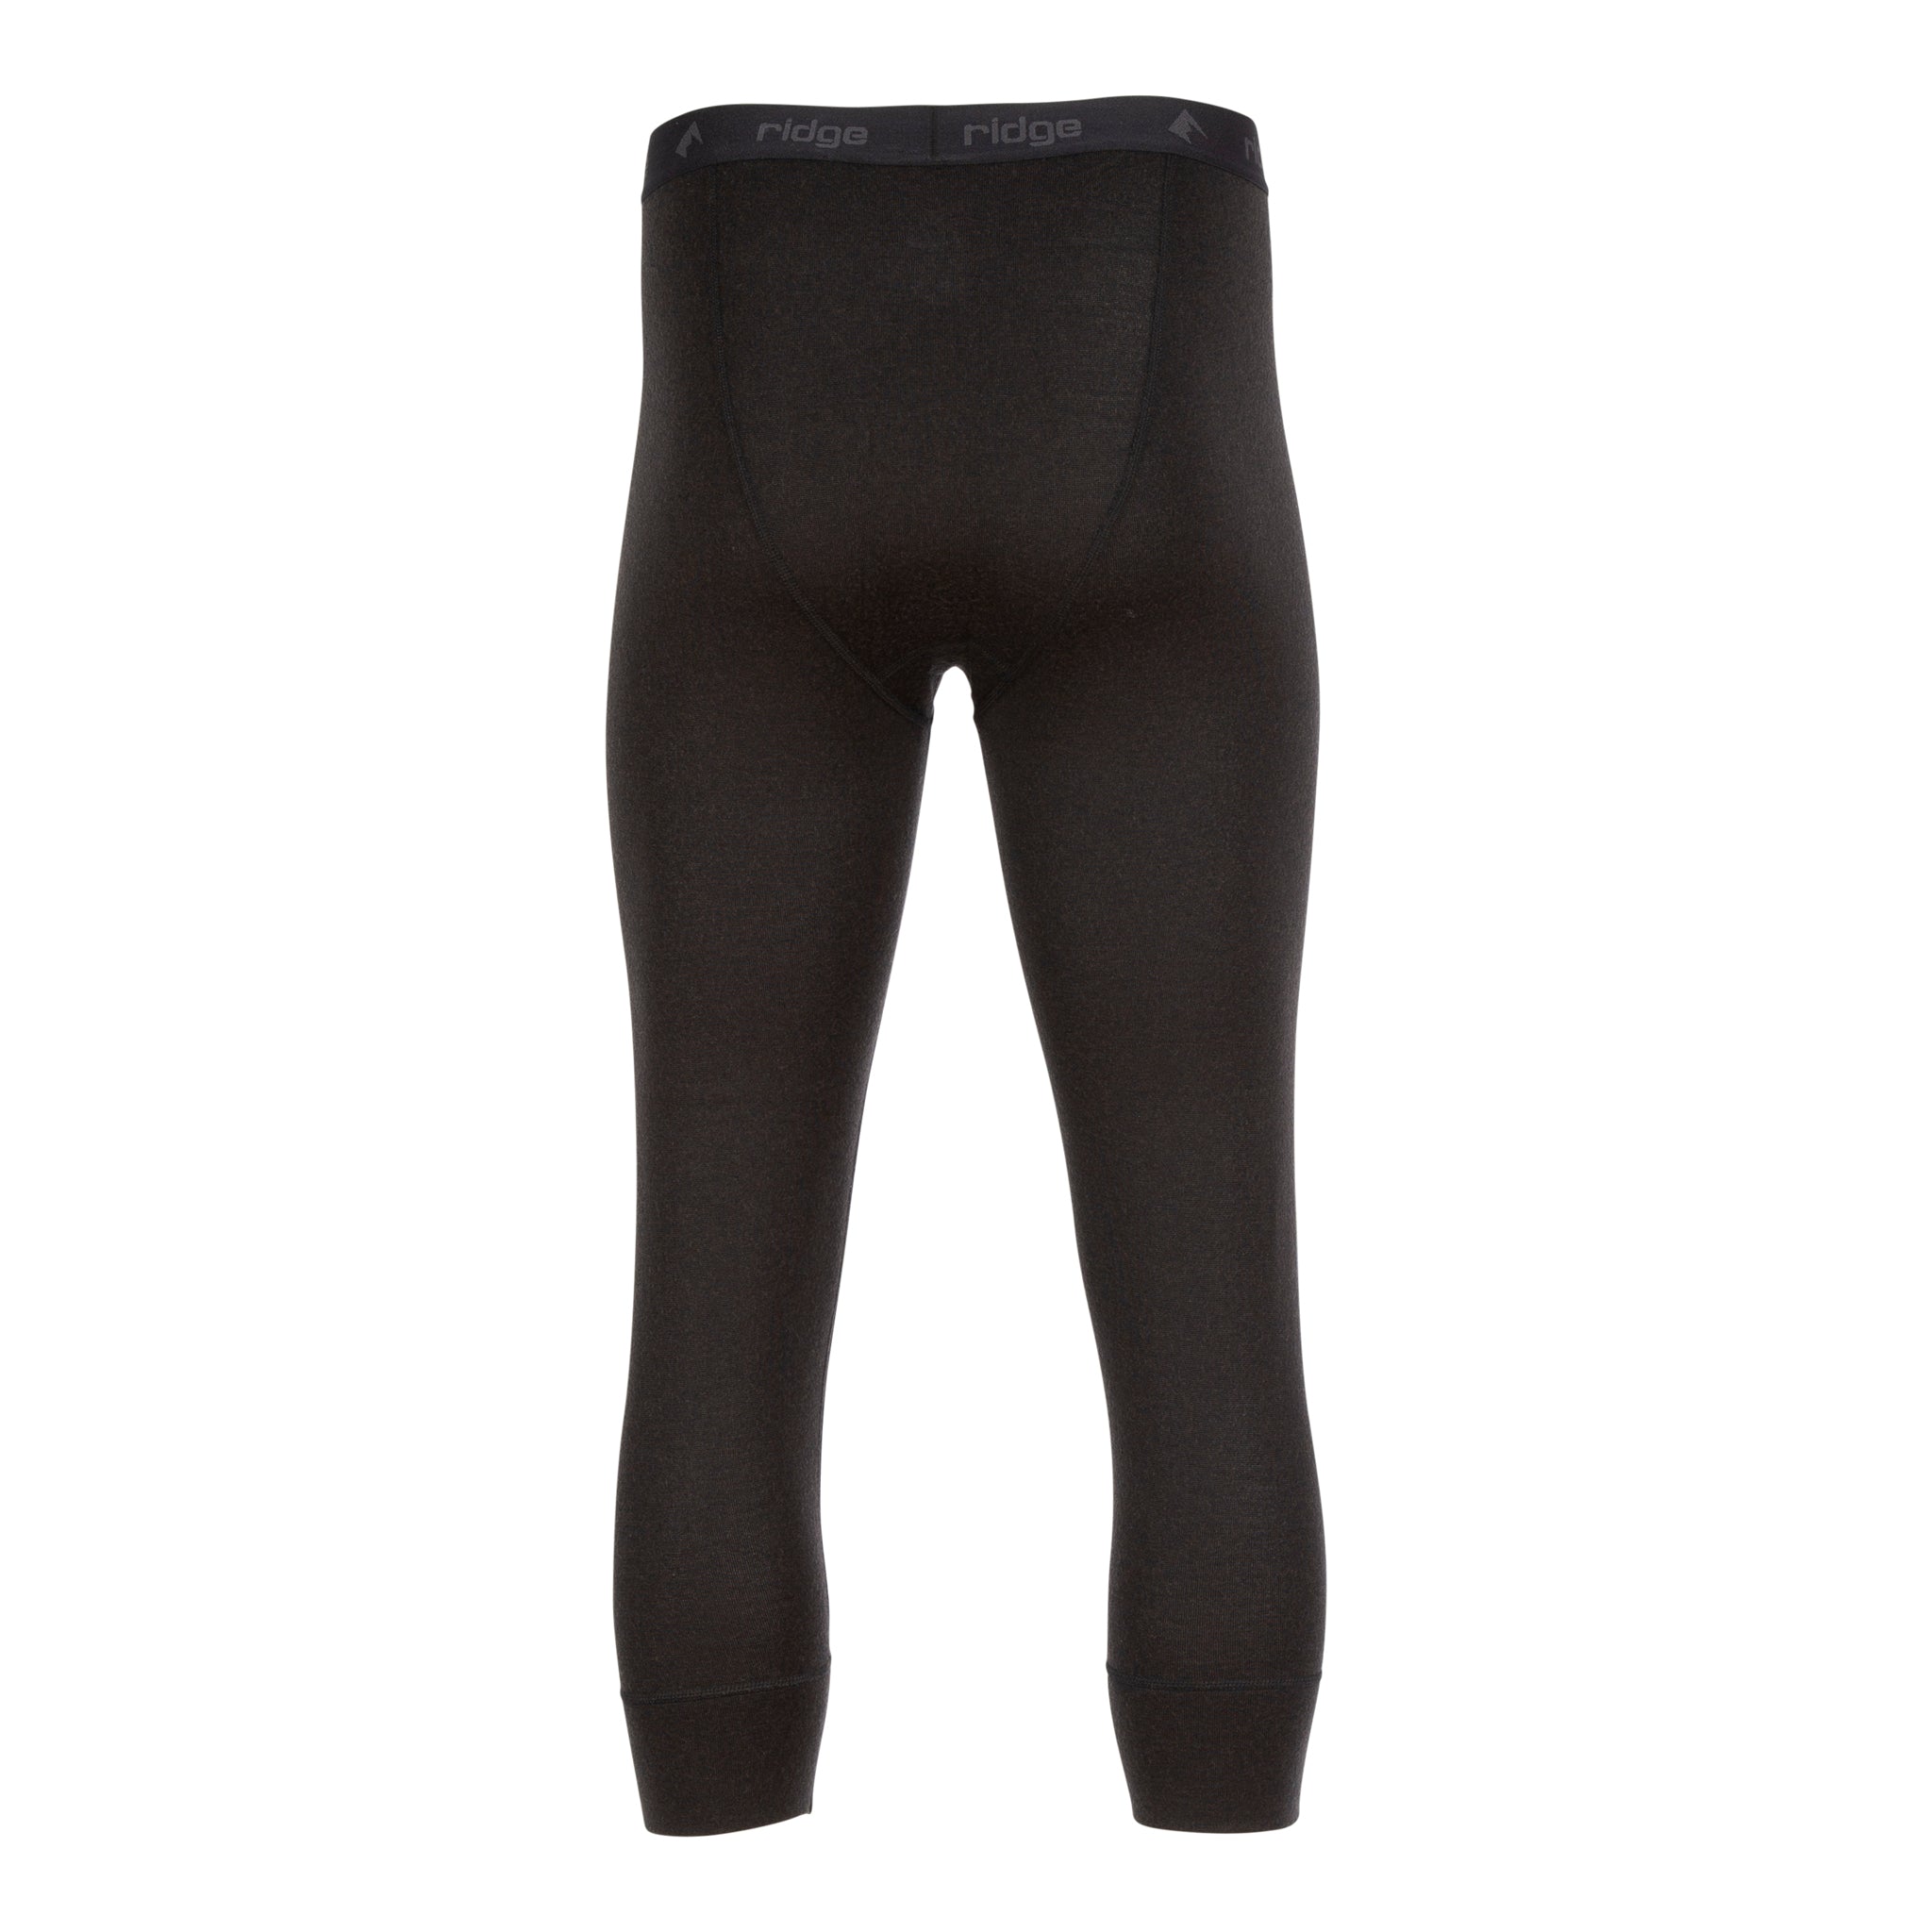 Natural Merino Wool Leggings for Men - Winter Long Johns - Thermal  Underwear